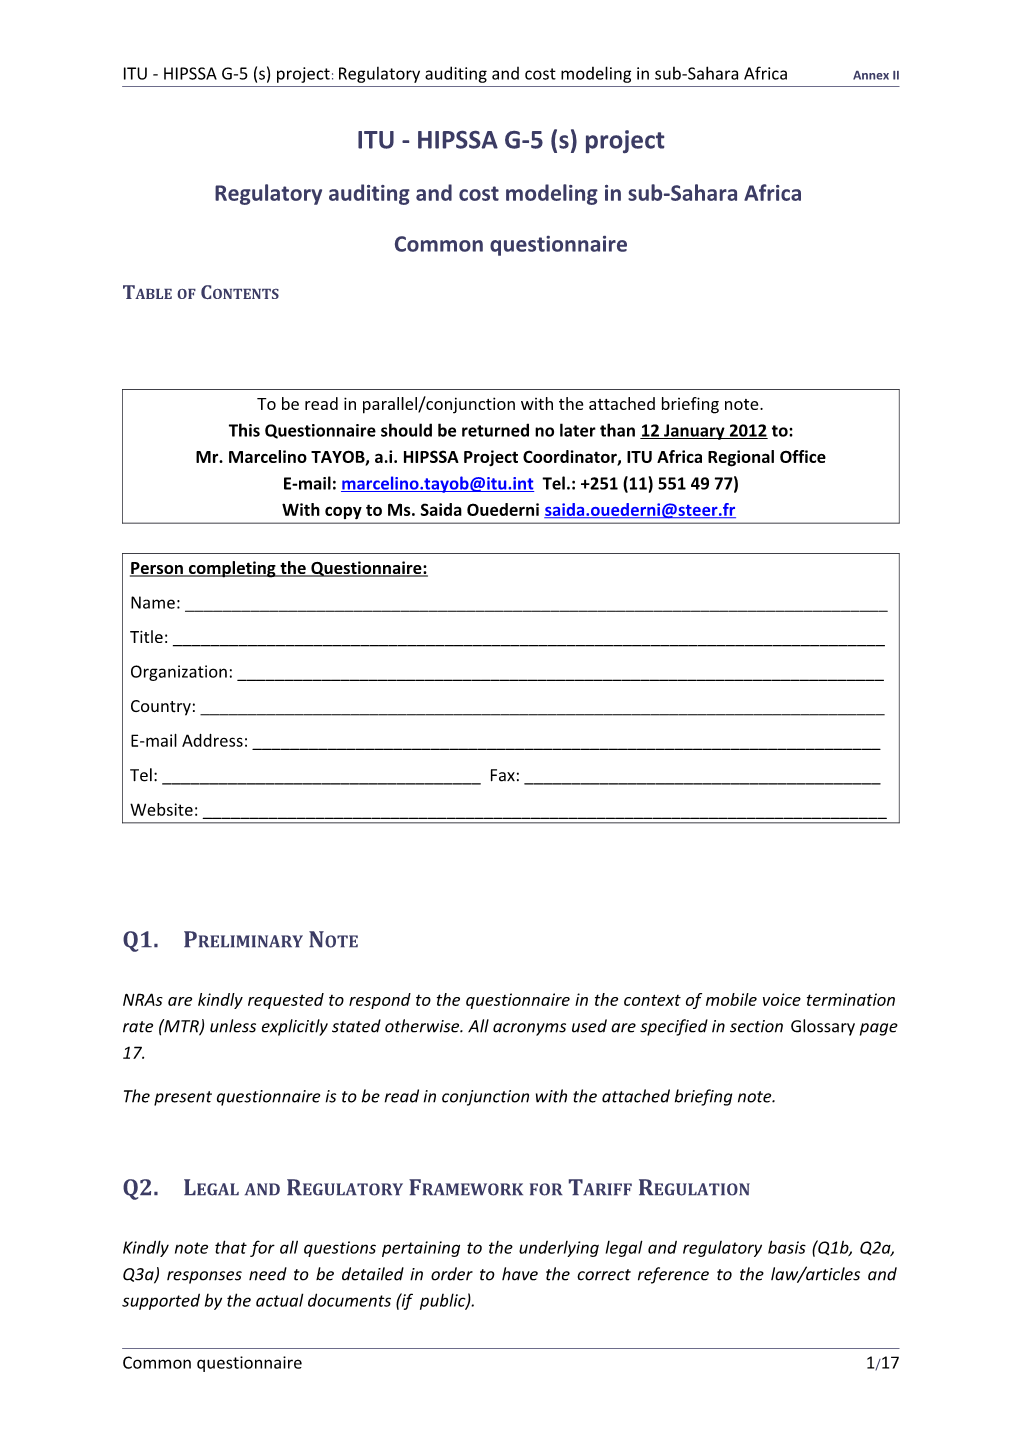 ITU - Price Regulation in Ssa: Common Questionnaire